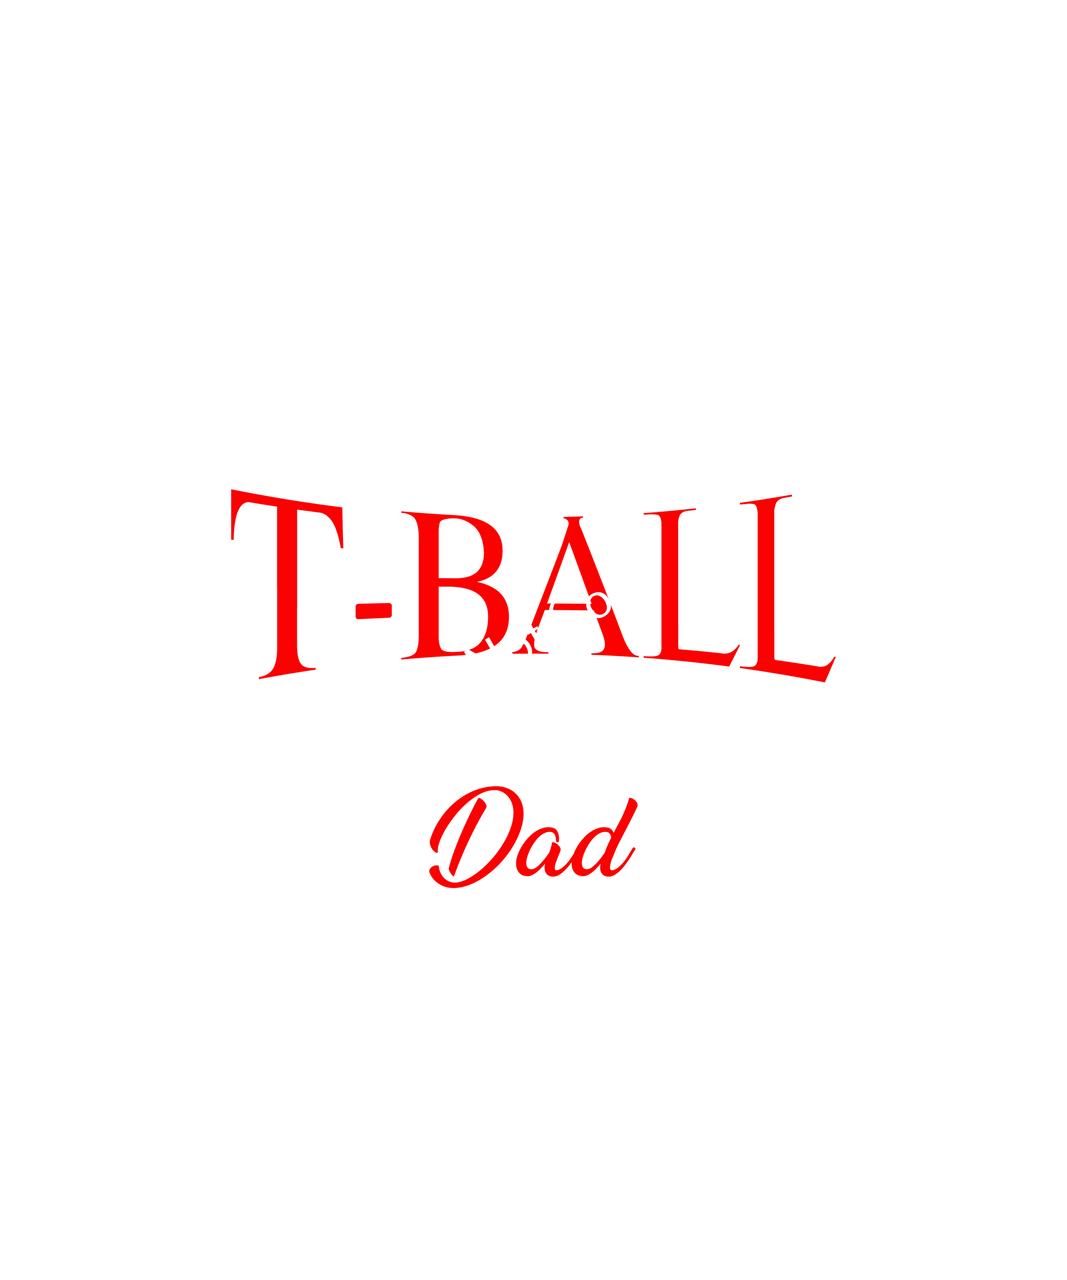 ColorSplash Ultra | T-Ball Dad CF 5